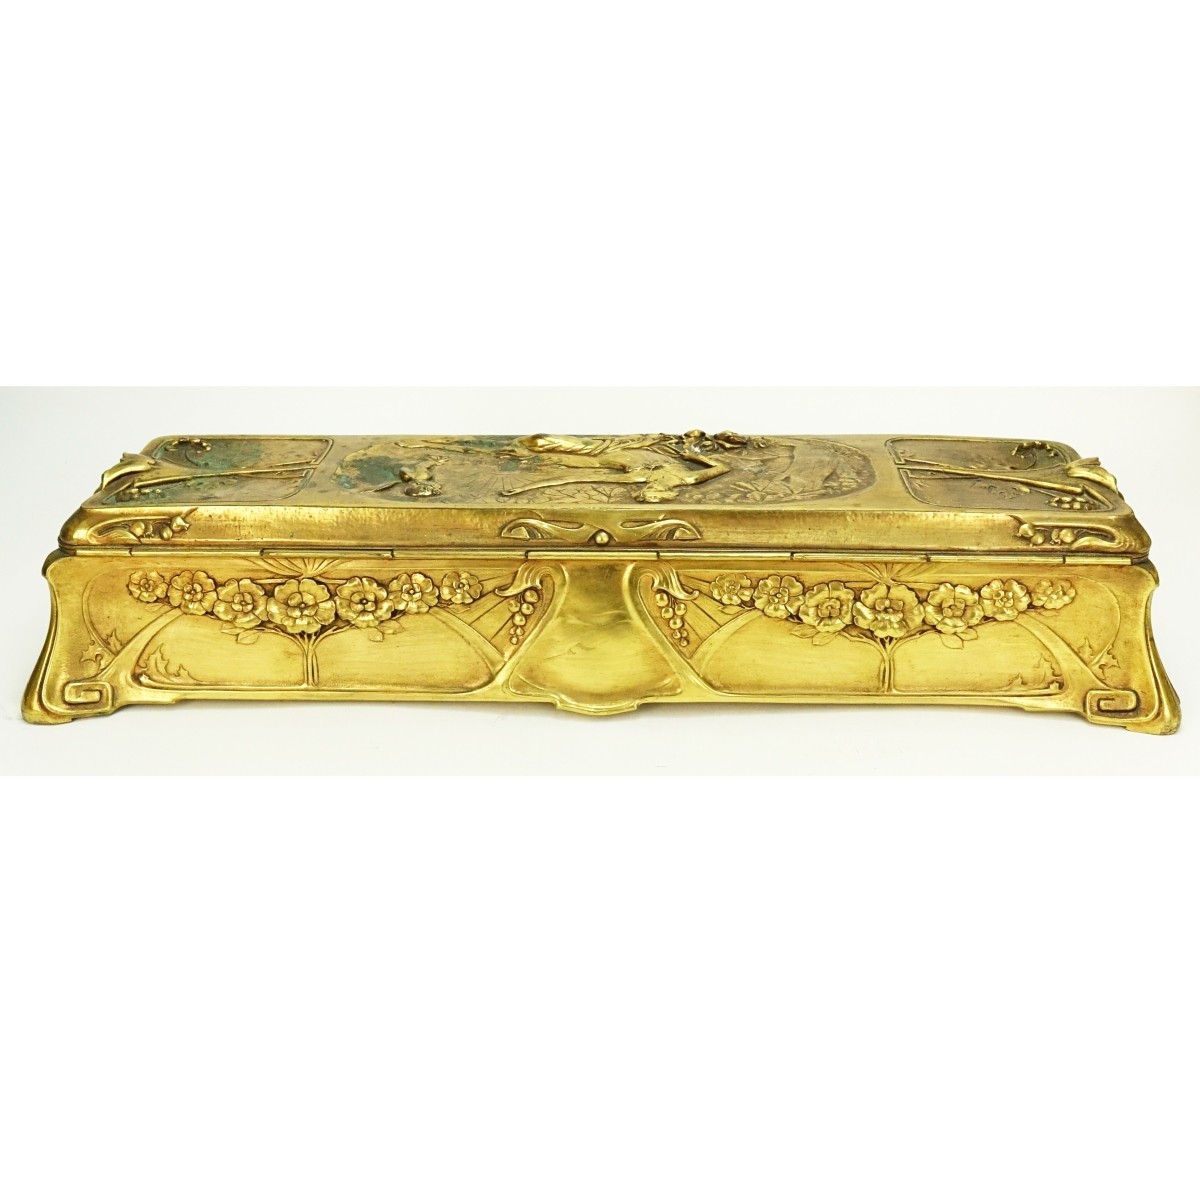 Antique French Art Nouveau Gilt Metal Hinged Box